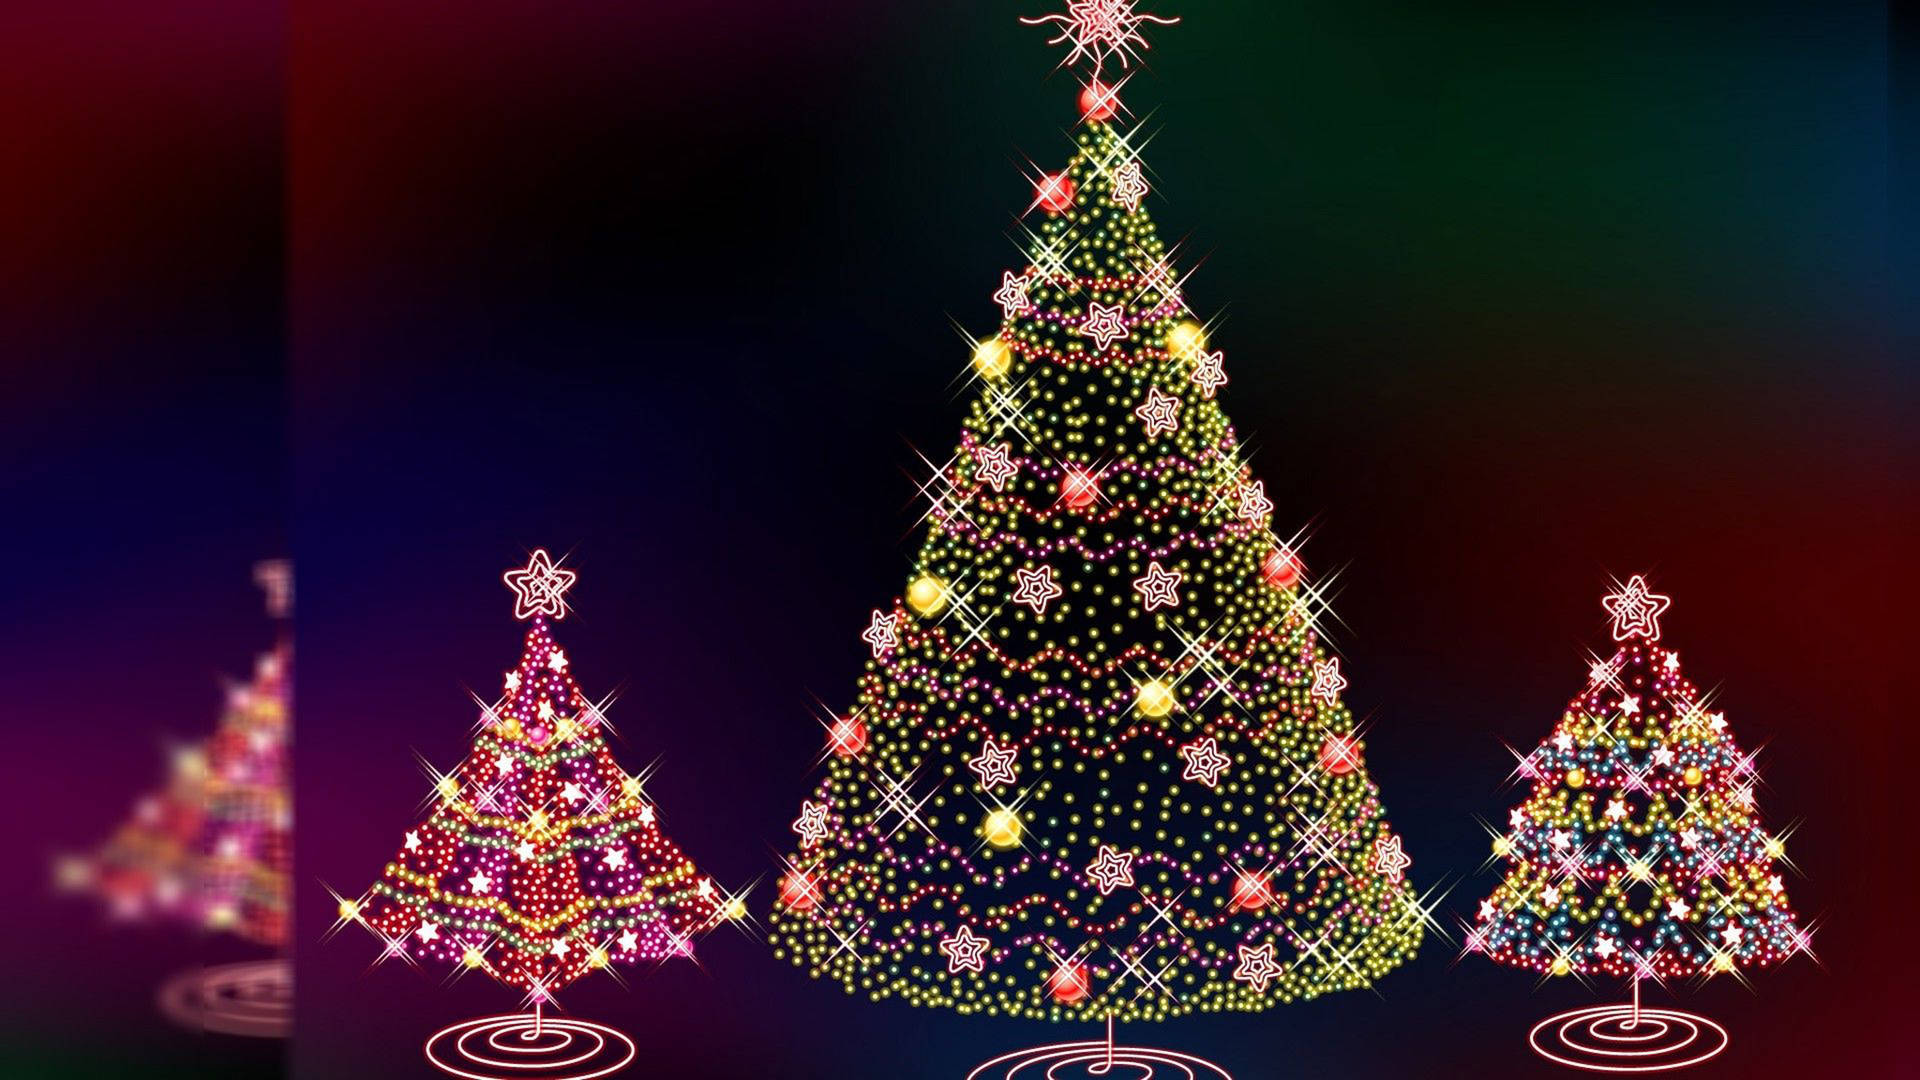 2048X1152 Christmas Desktop Wallpaper and Background